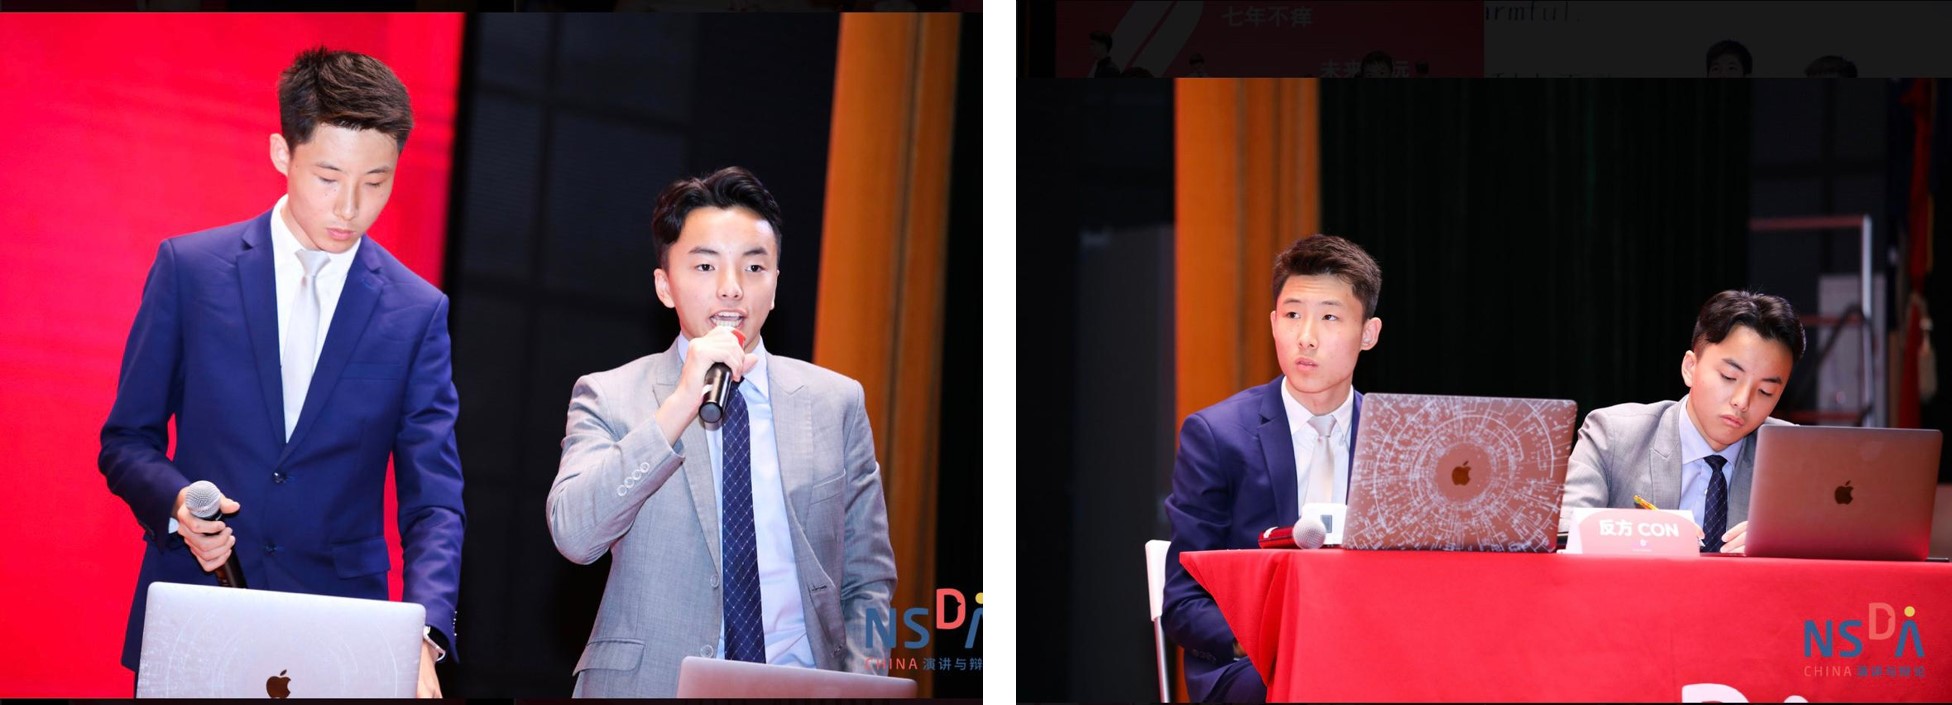 Guan Rong T and Jeffrey W at National Speech and Debate Association (NSDA) National Championships